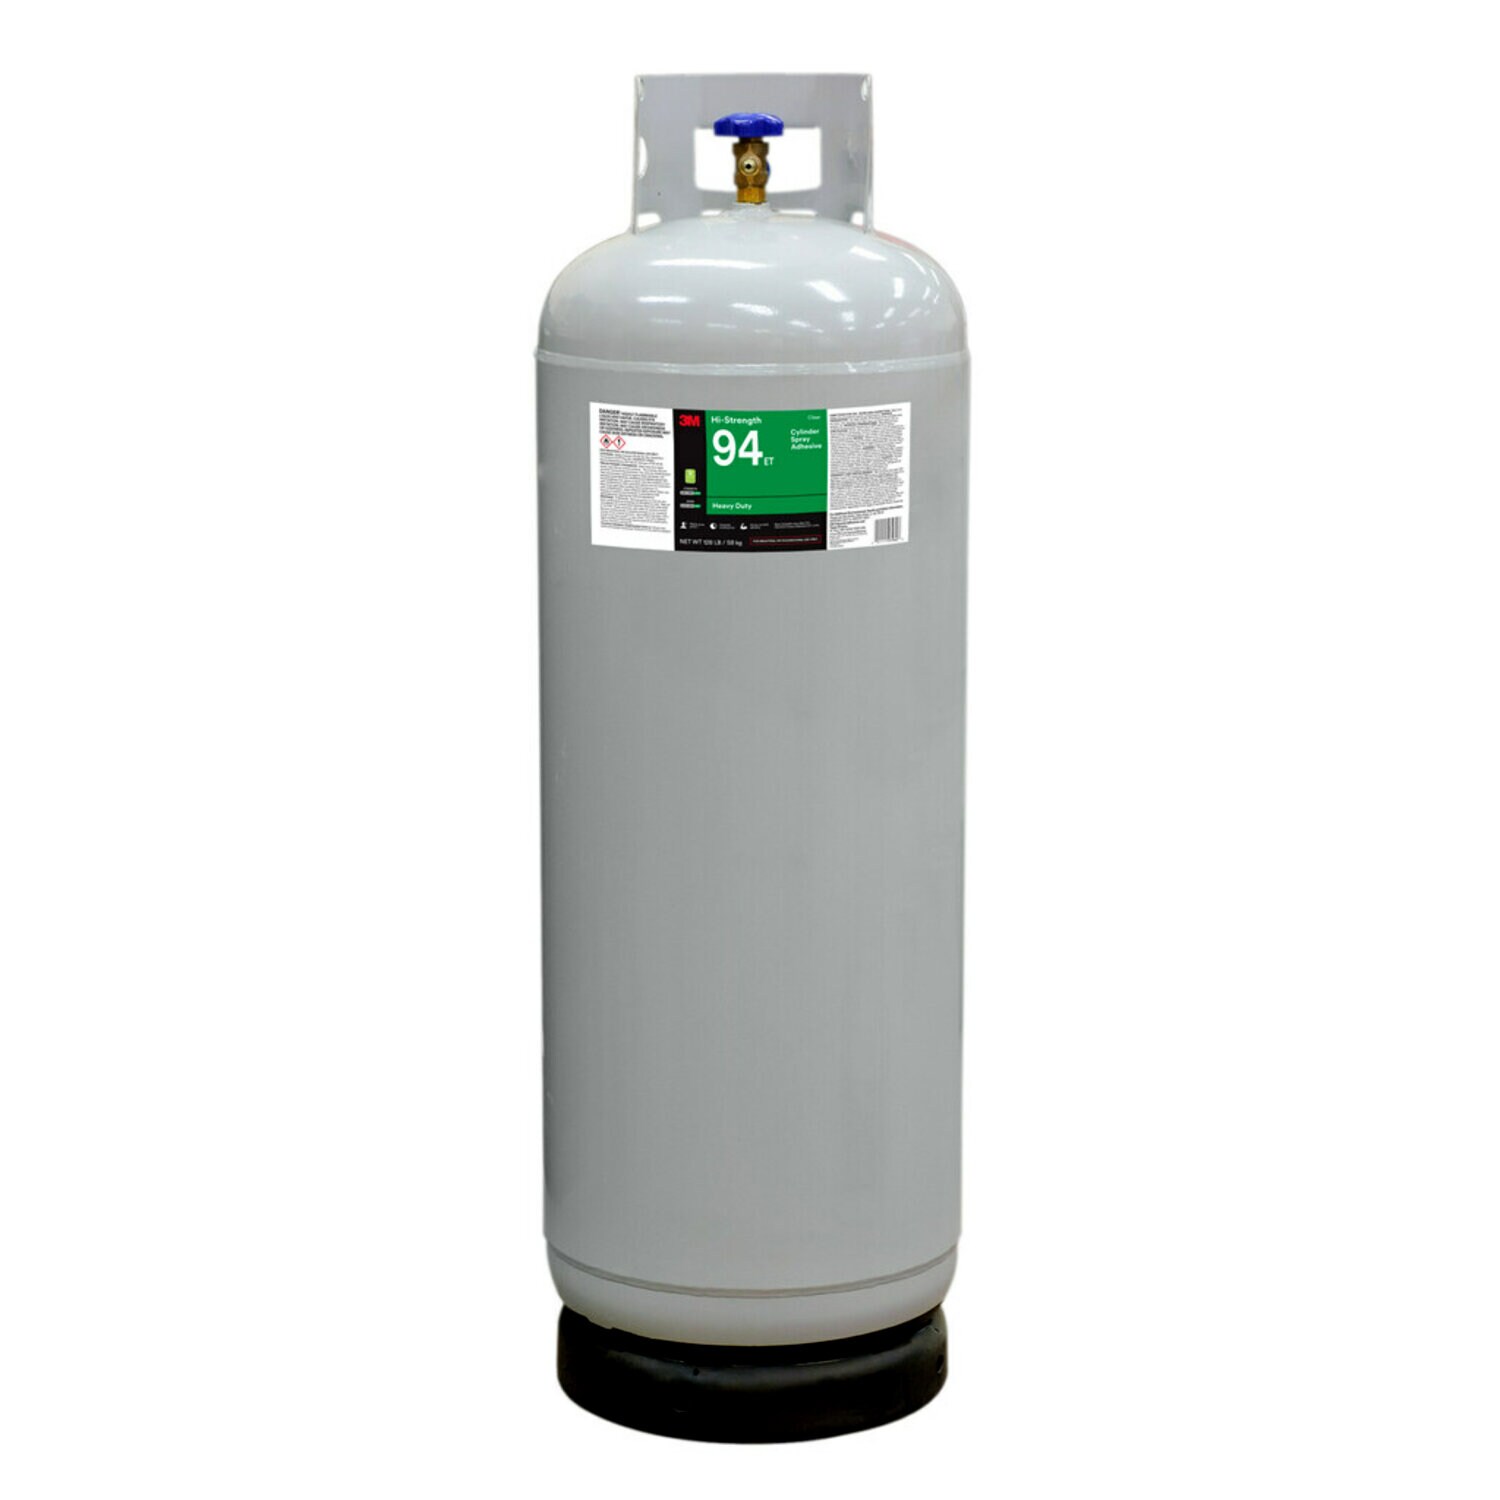 7100037711 - 3M Hi-Strength 94 ET Cylinder Spray Adhesive, Clear, Intermediate
Cylinder (Net Wt 128 lb), 1/Cylinder